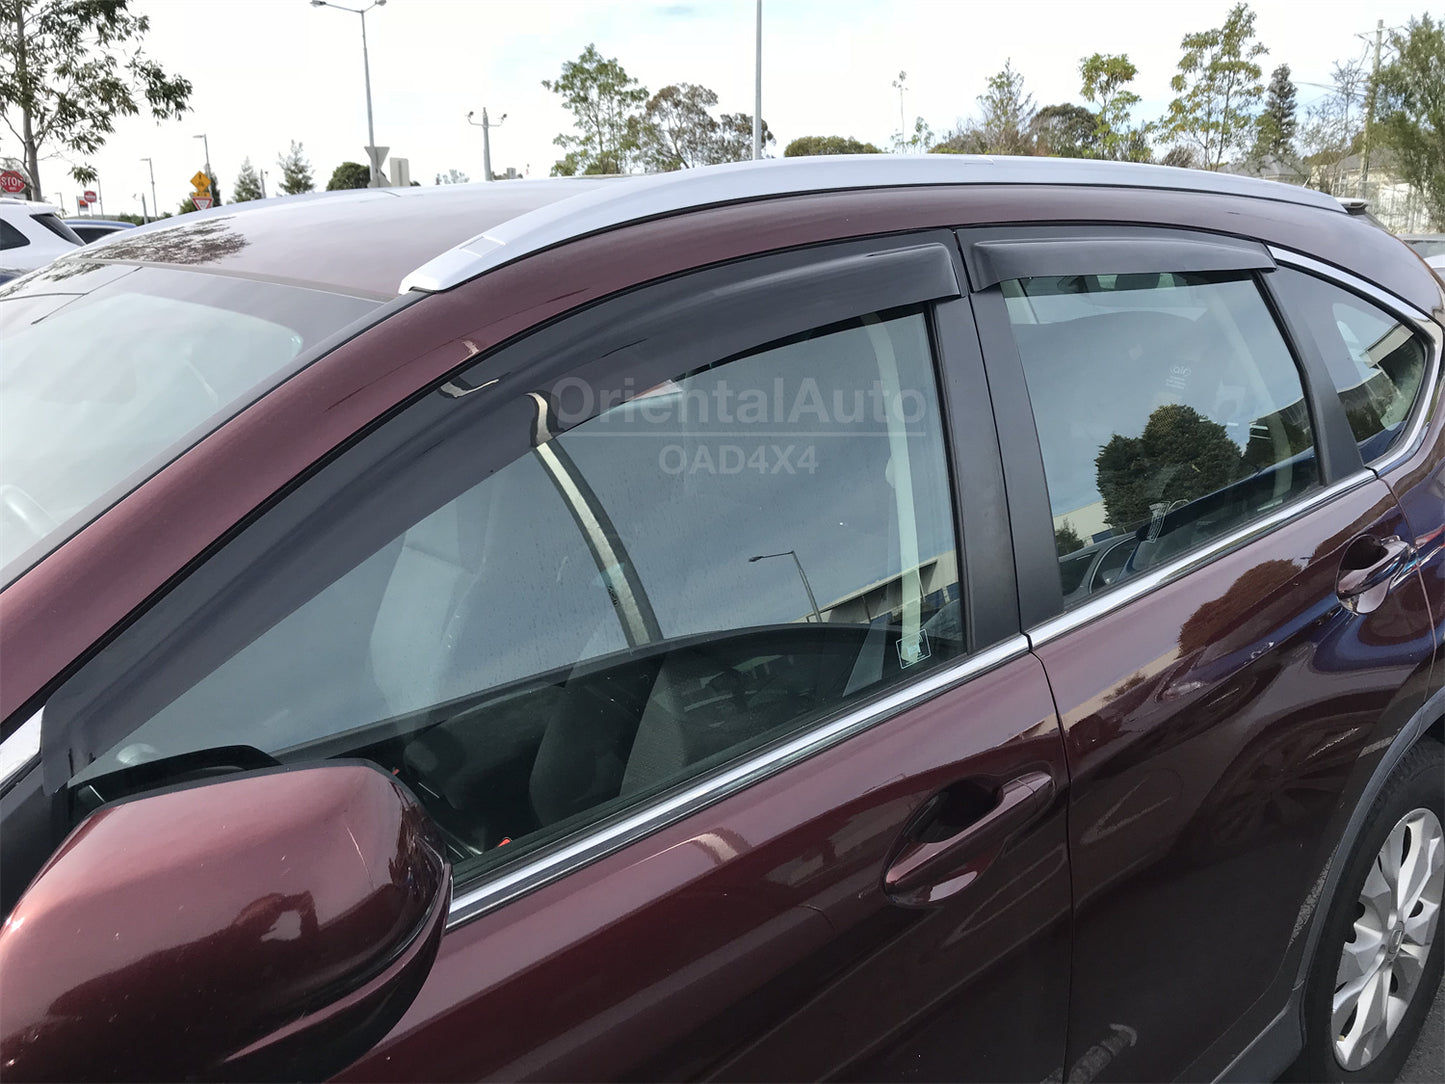 Premium Weathershields Weather Shields Window Visor For Honda CRV RM Series 2012-2017